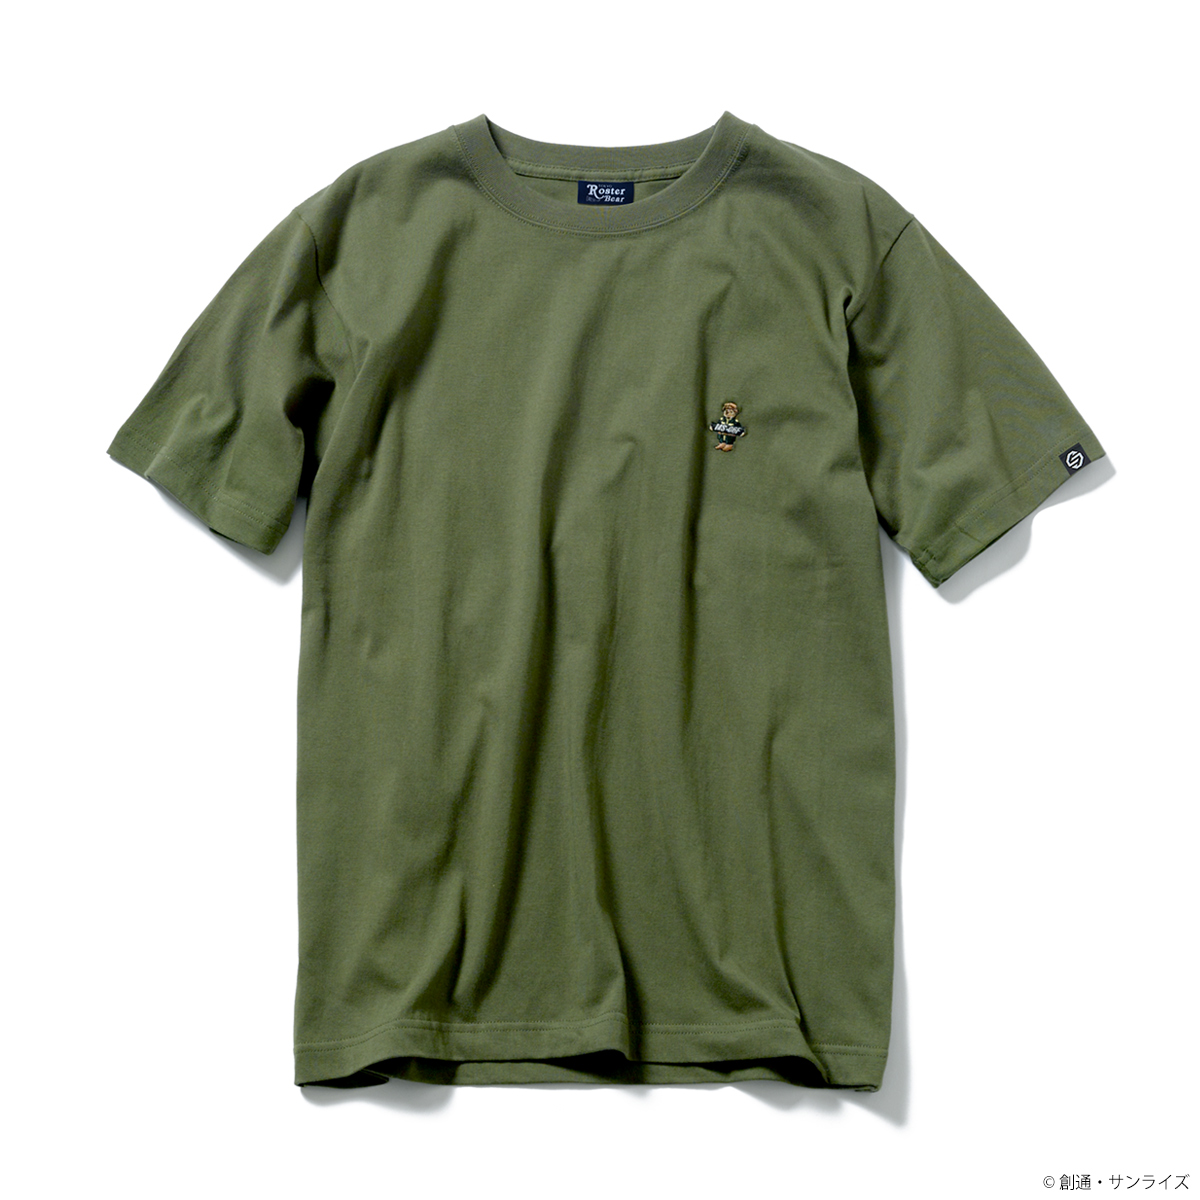 STRICT-G ROSTER BEAR『機動戦士ガンダム』 Tシャツ MS-06F